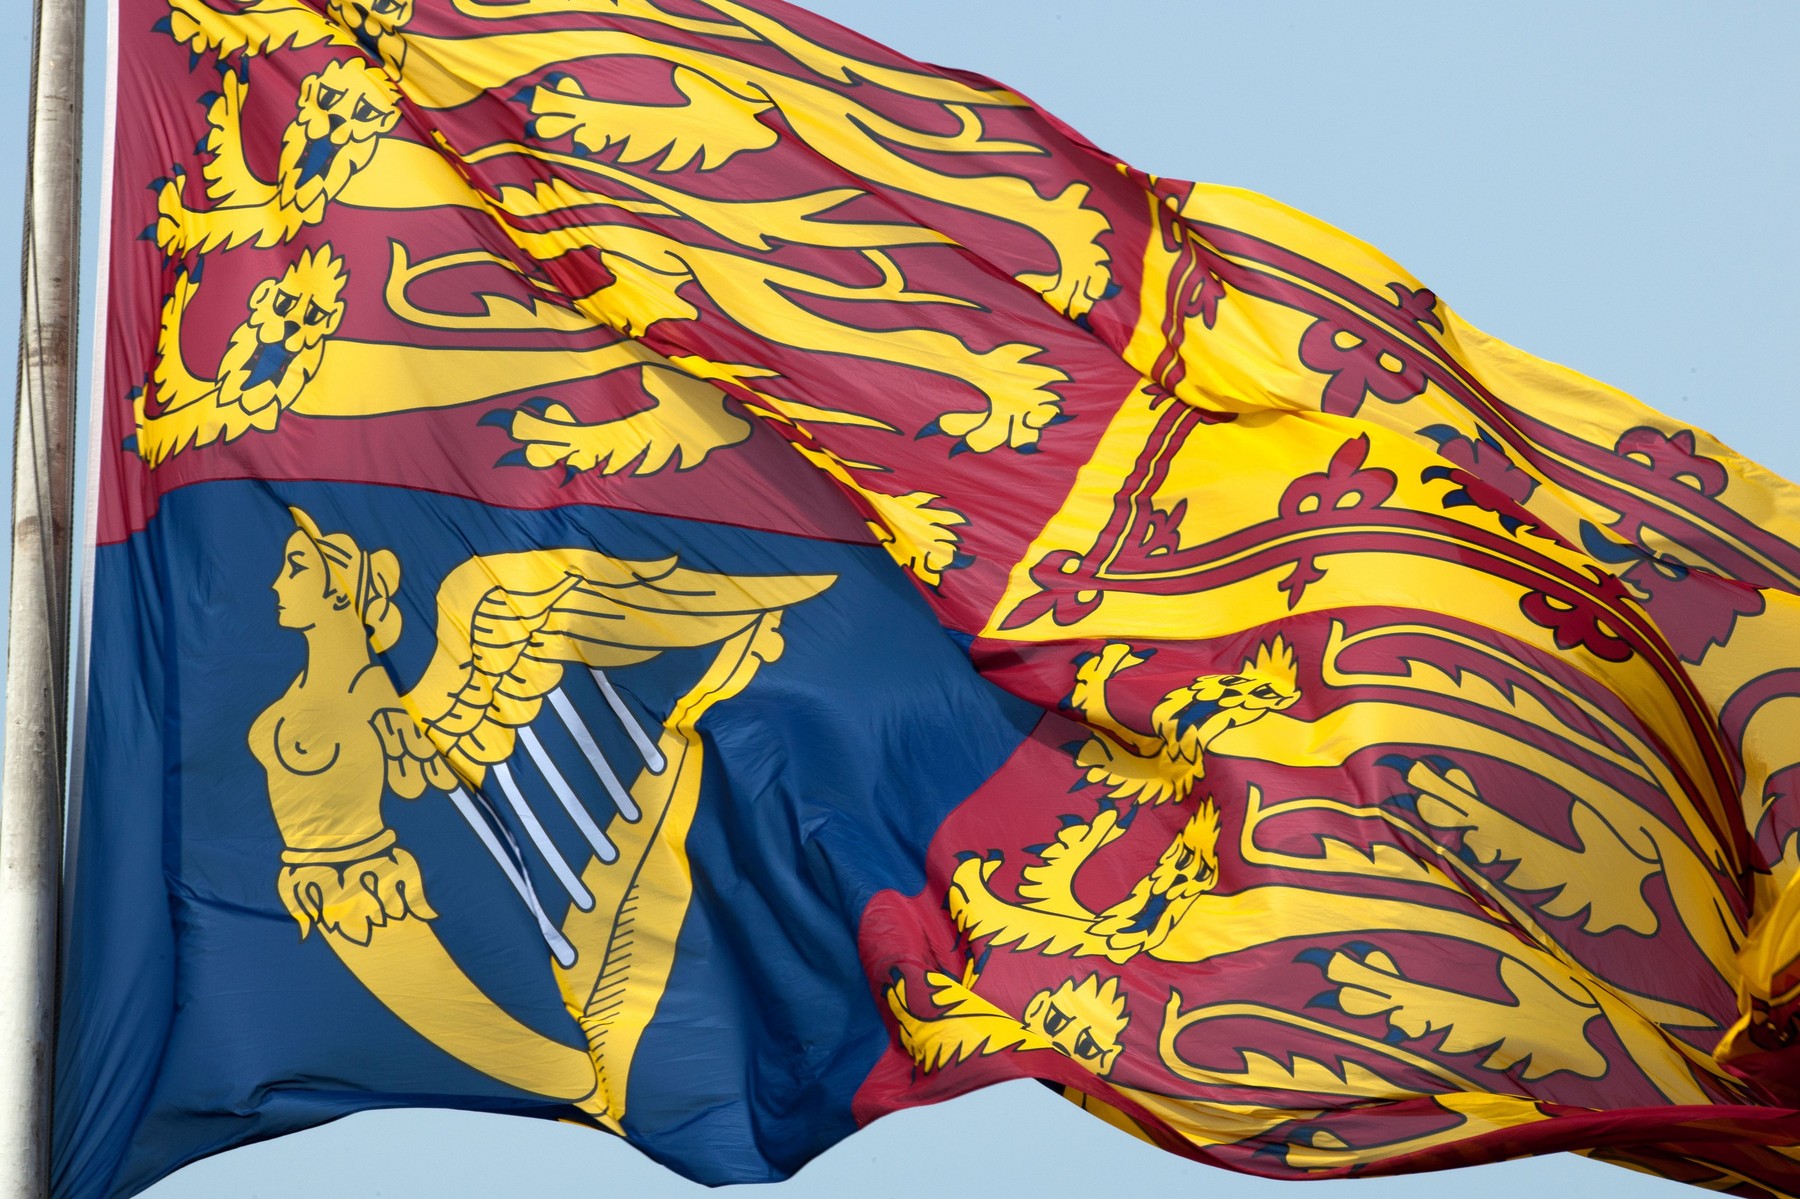 Zastava, Royal Standard